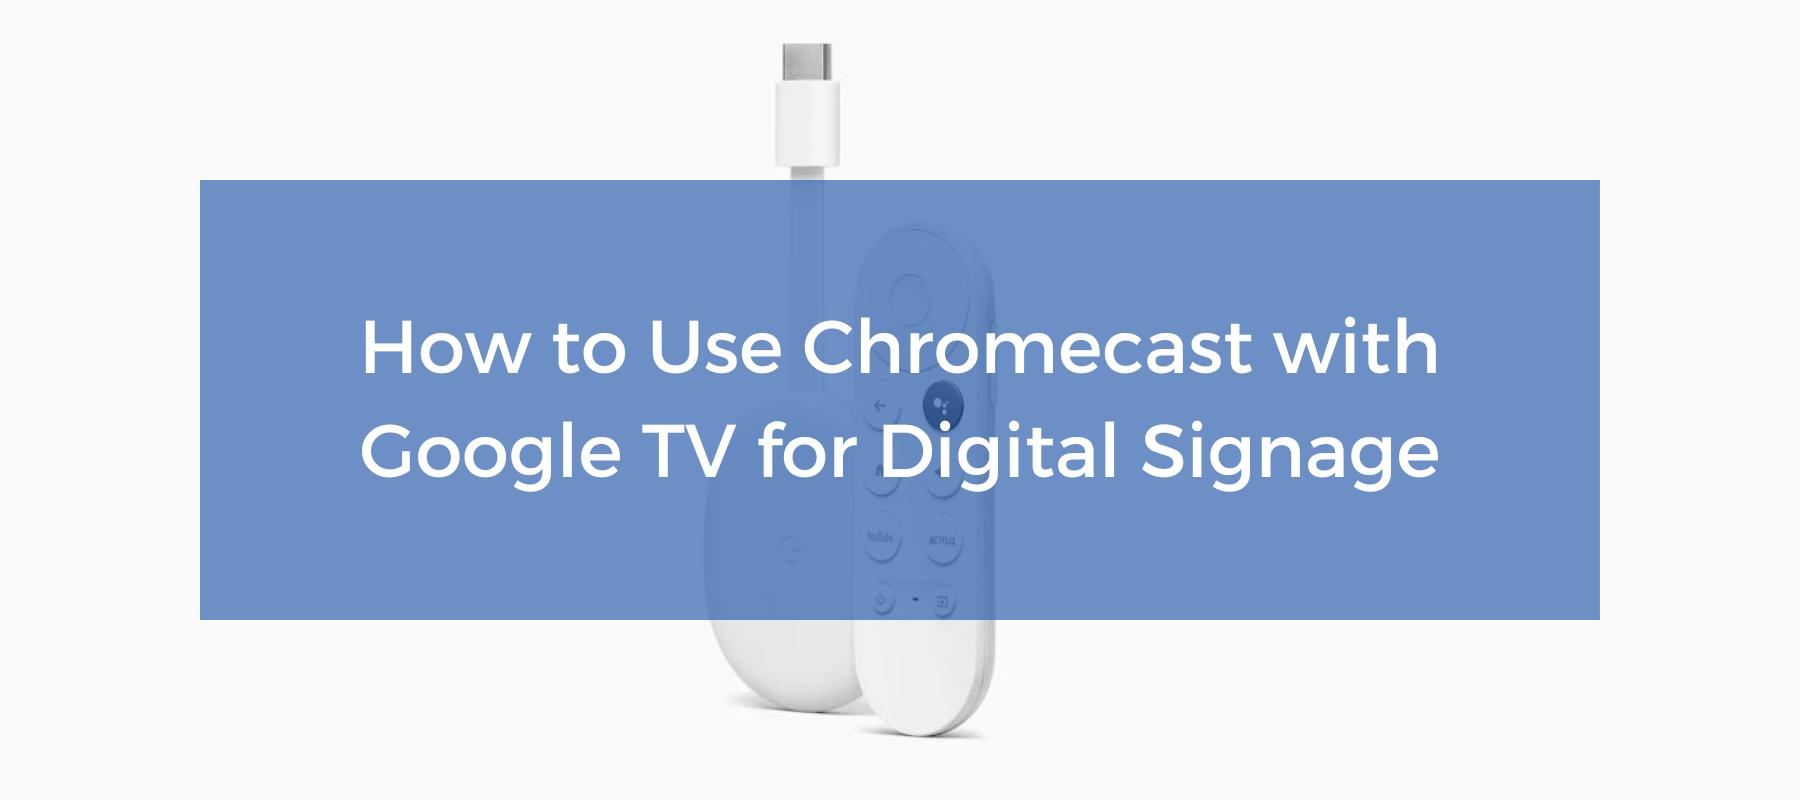 Google Chromecast Digital Signage